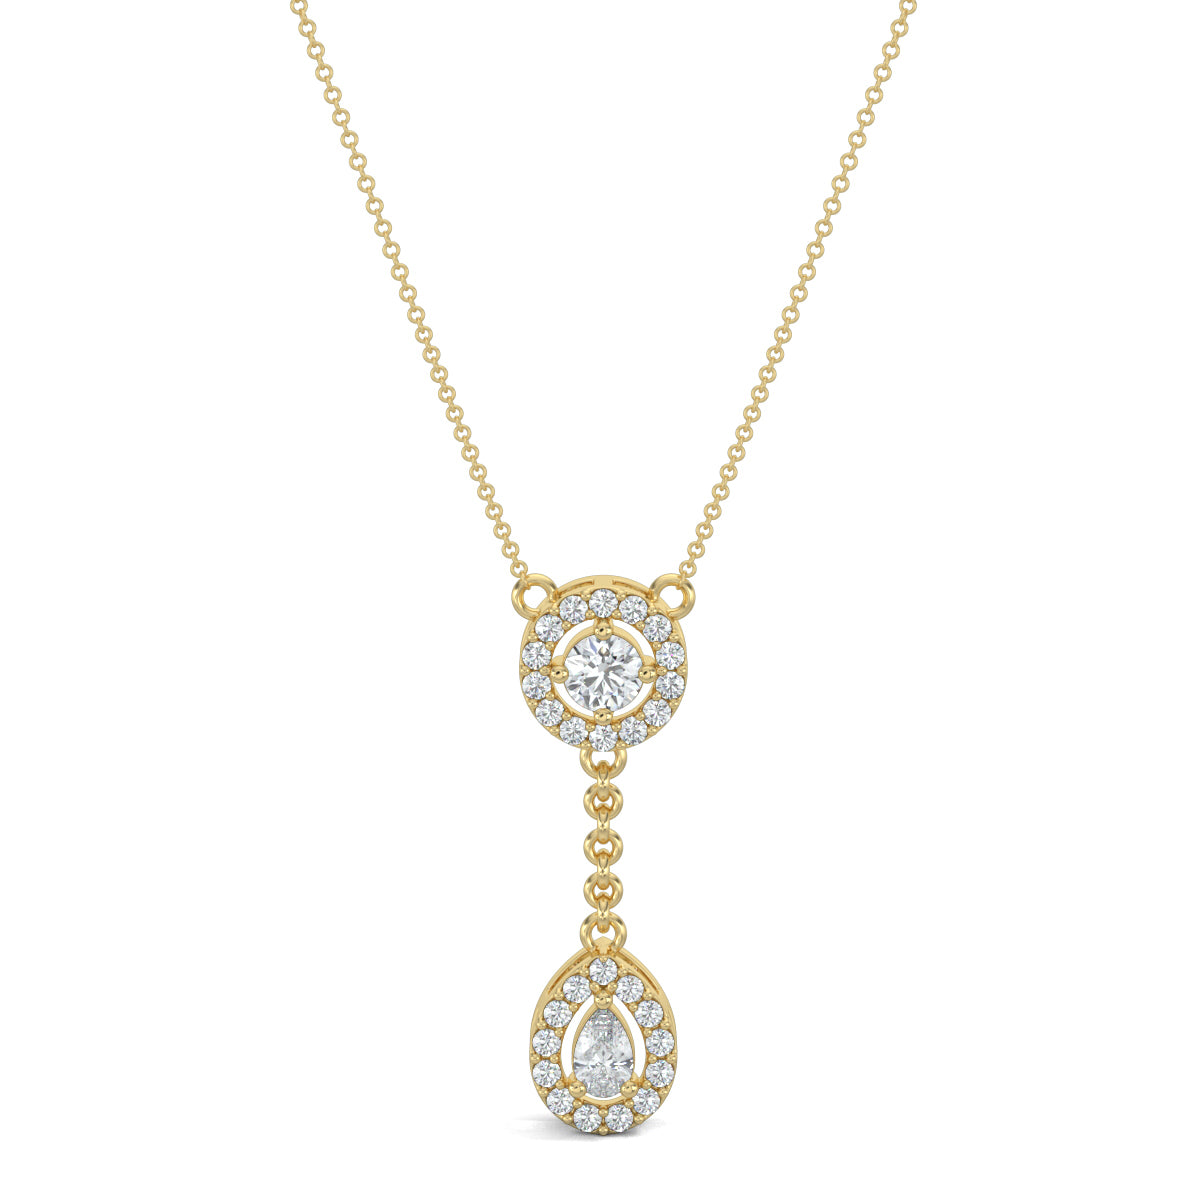 Yellow Gold, Diamond Pendants, Natural diamond pendant, Lab-grown diamond pendant, casual pendant, id length pendant, circular border, round diamond, halo setting, drop-shaped border, pear diamond, delicate chain, elegant pendant.